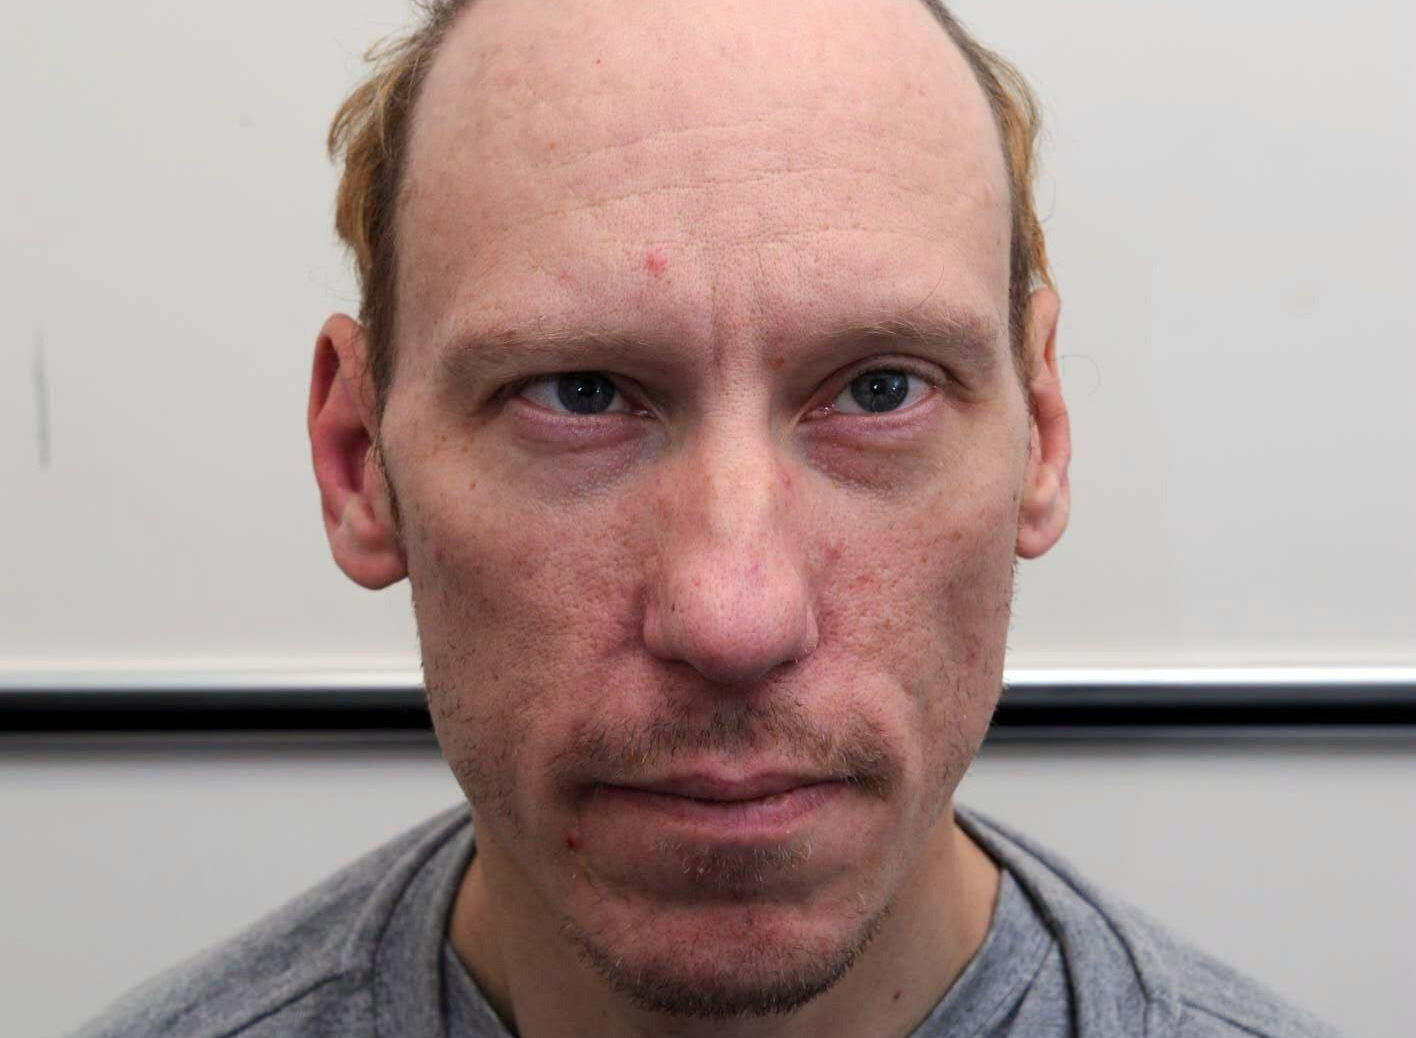 The horrific killer Stephen Port was given life imprisonment.